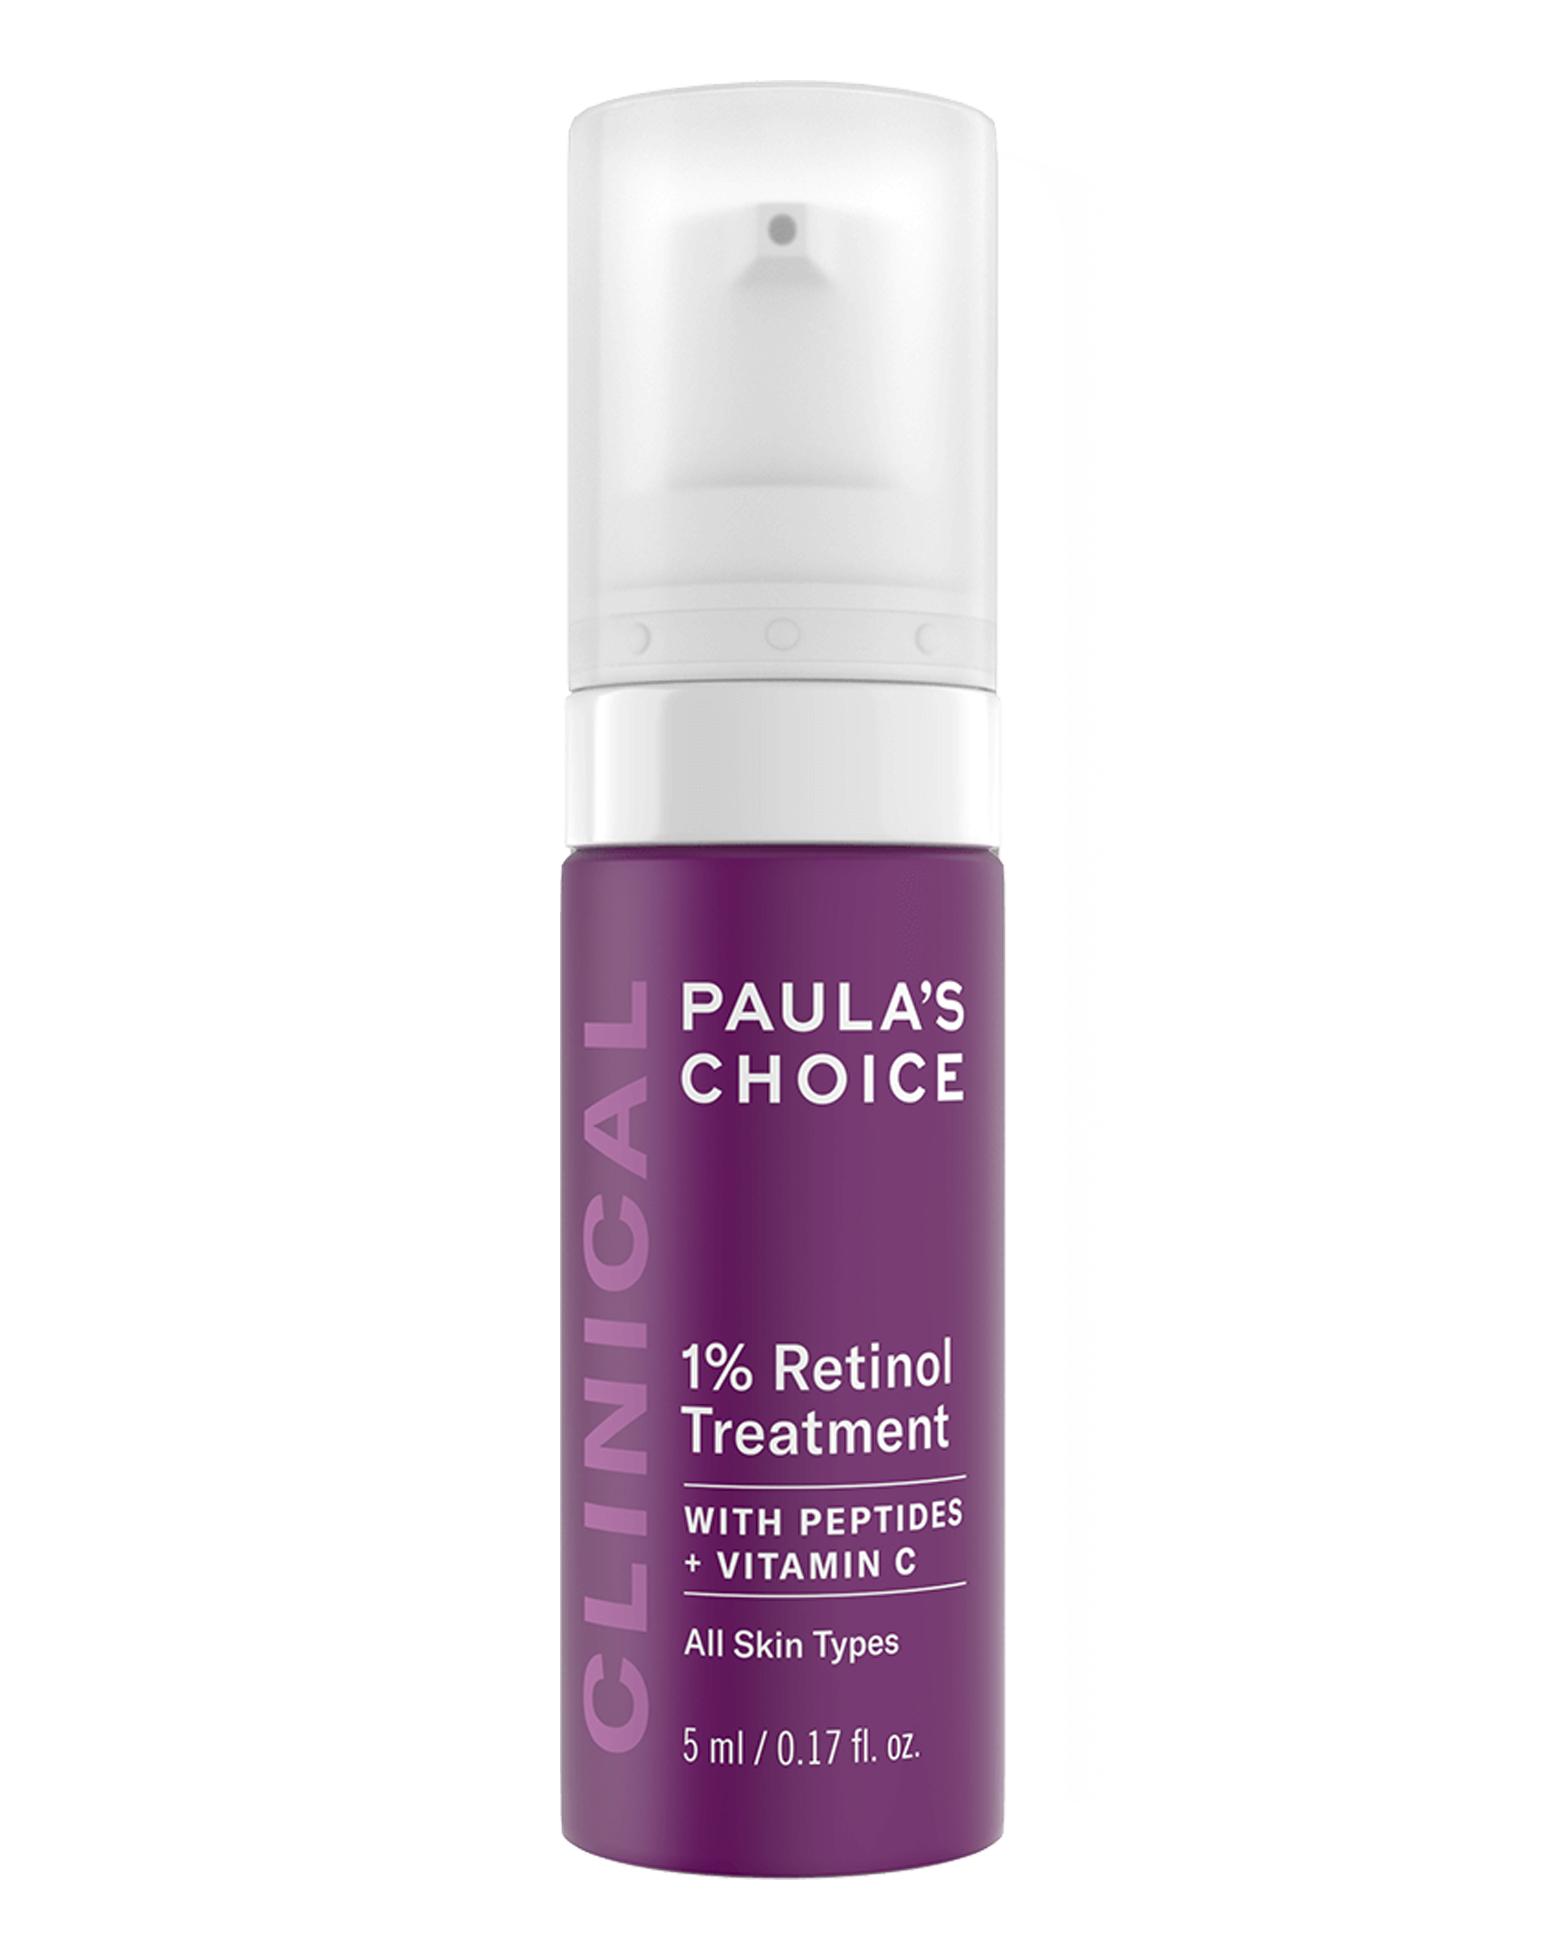 Paula's Choice 1% Retinol Treatment 5ml